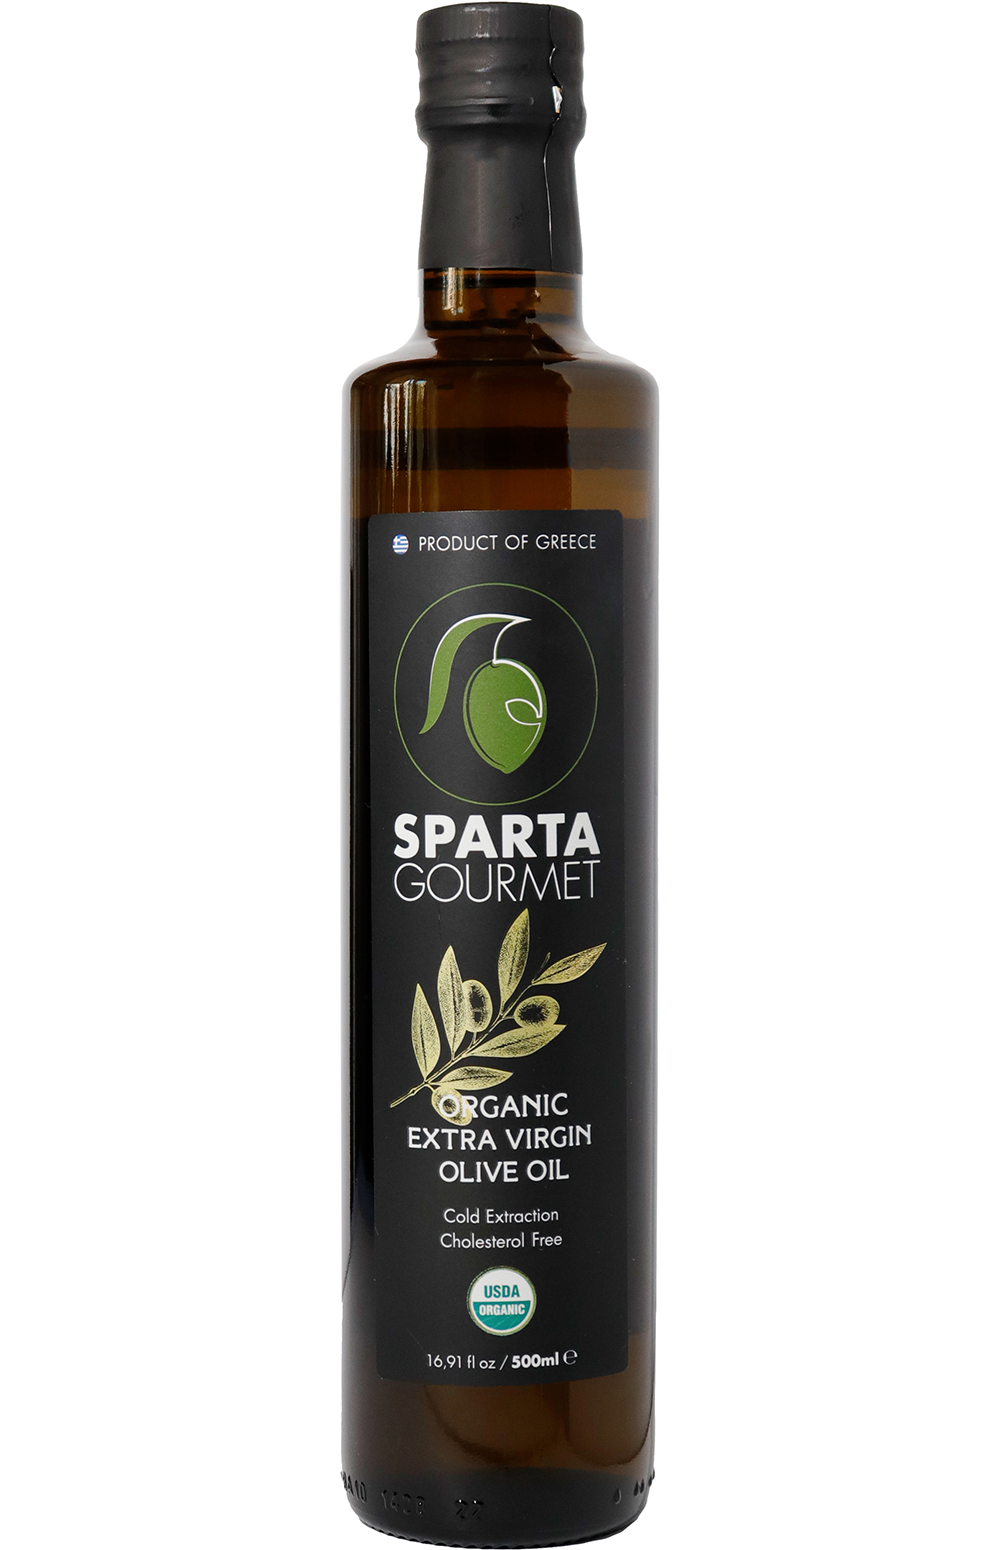 Sparta Gourmet Organic